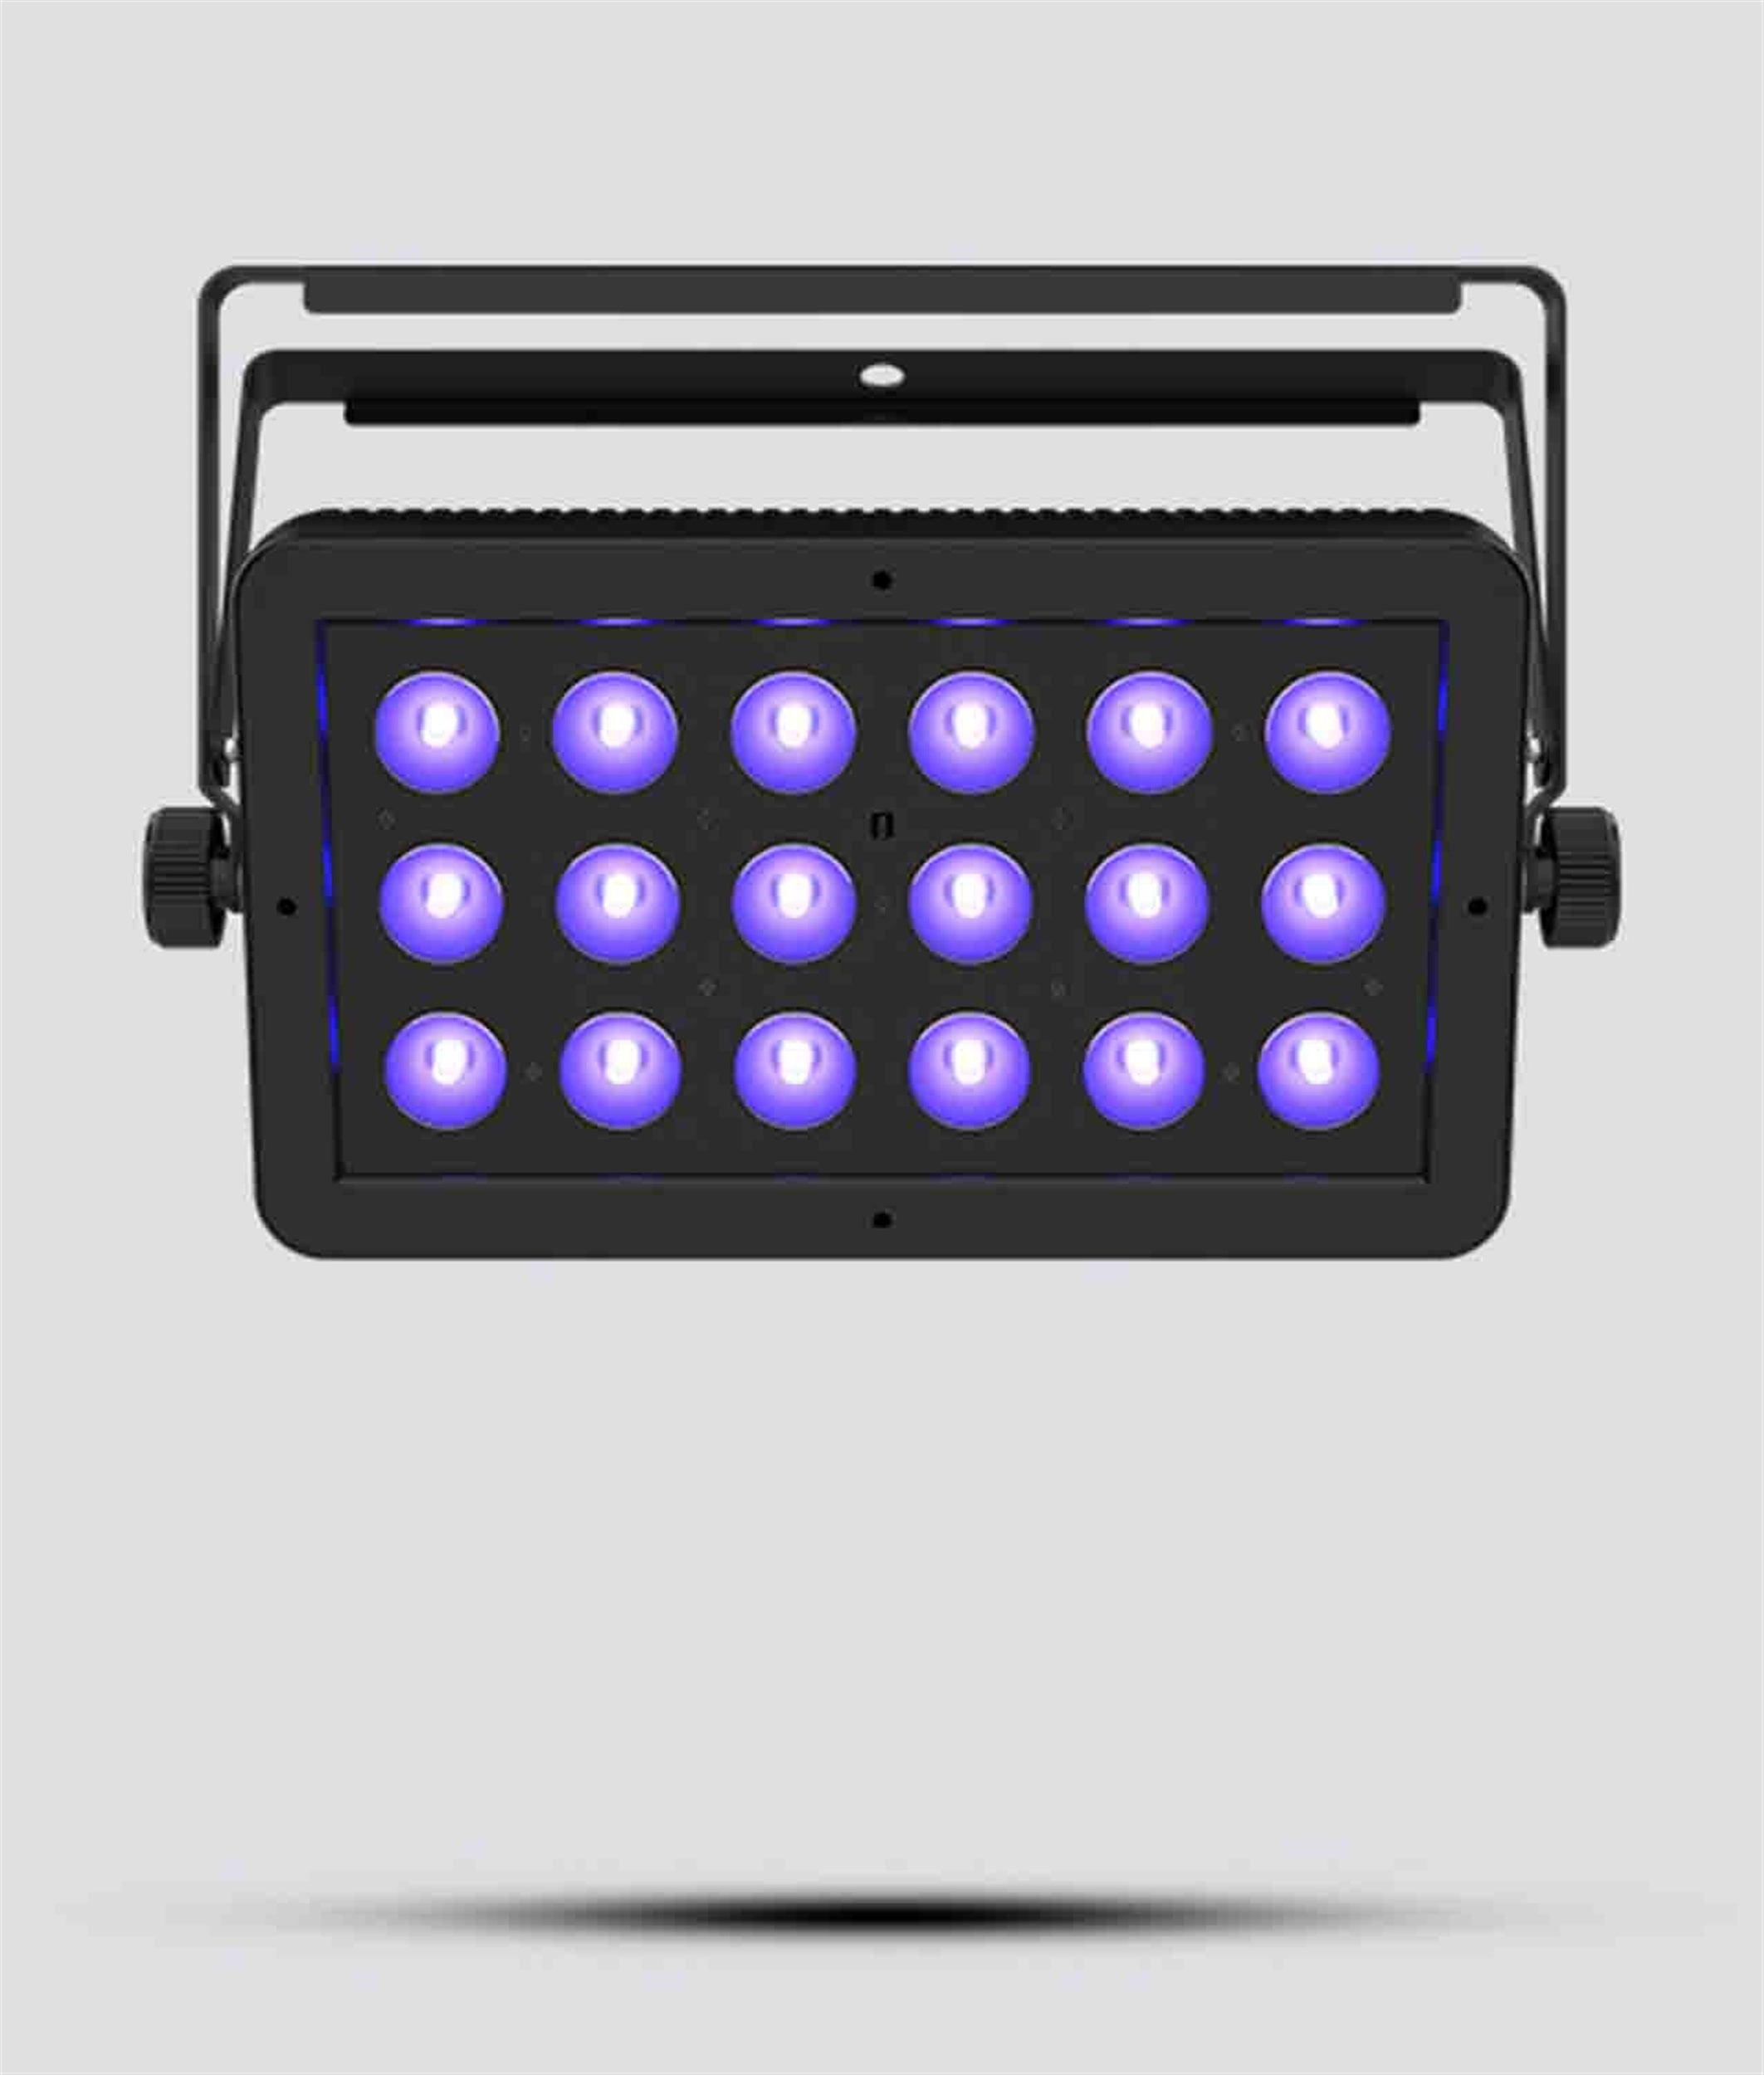 B-Stock: Chauvet LED Shadow 2 ILS, Blacklight Panel Wash with ILS - Hollywood DJ